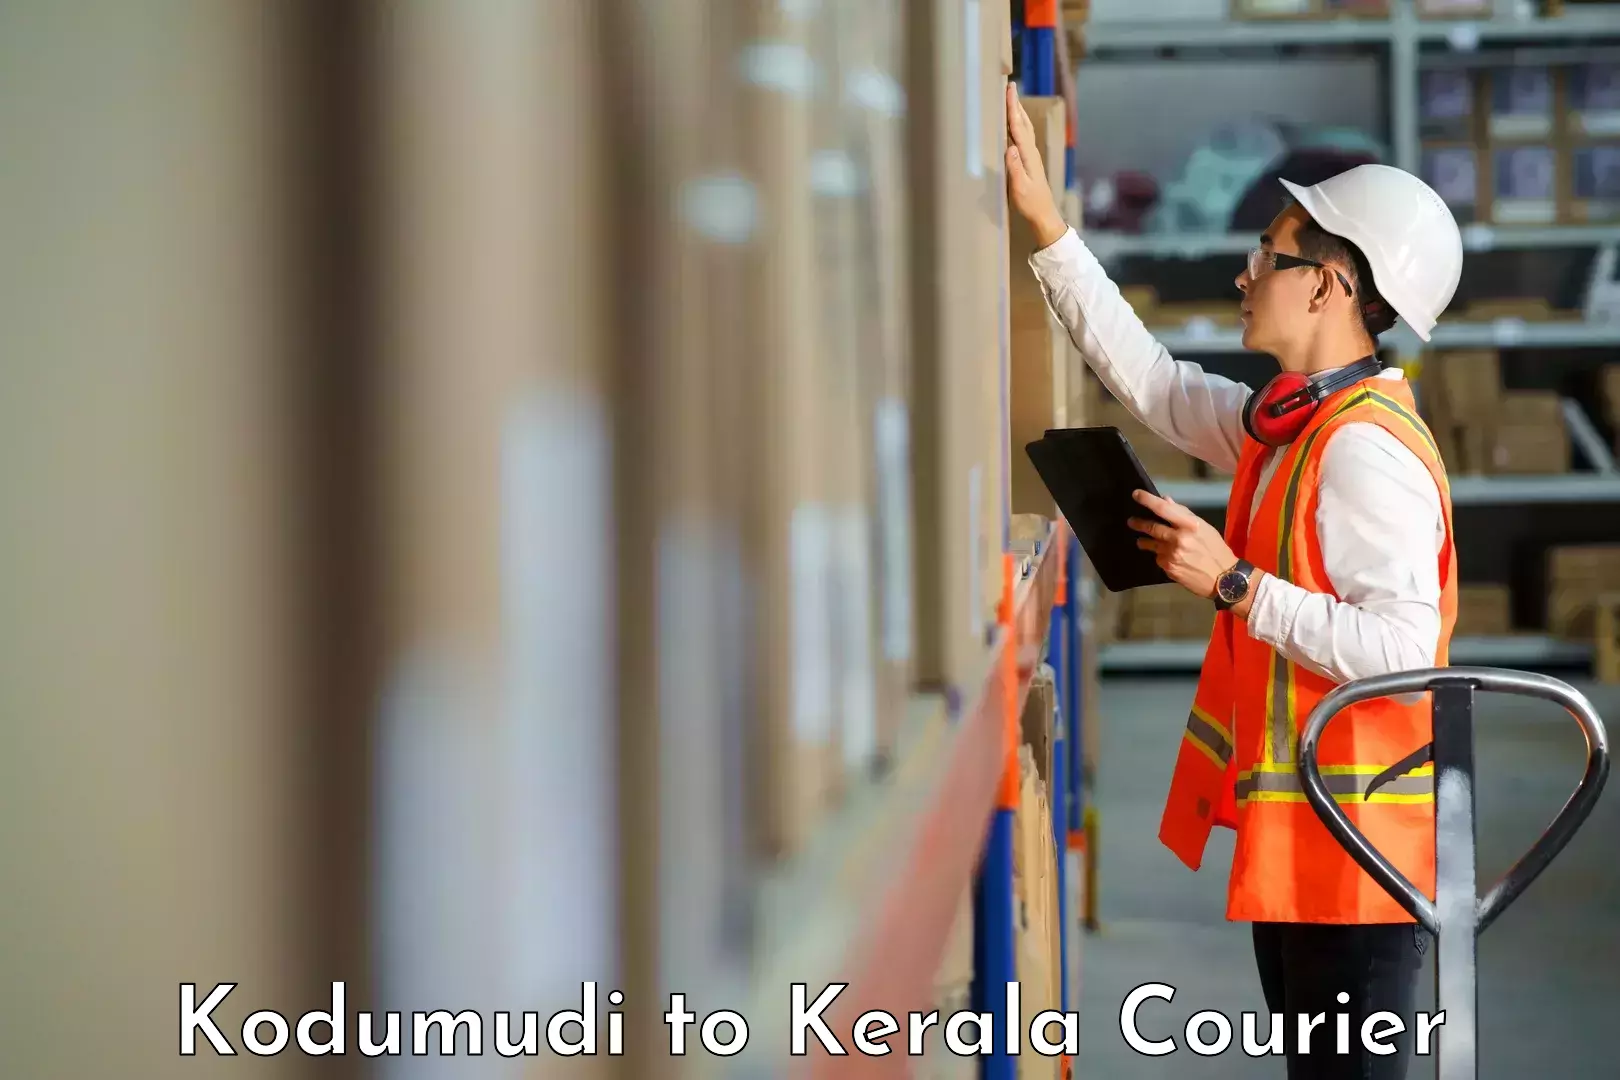 Global courier networks Kodumudi to Cochin